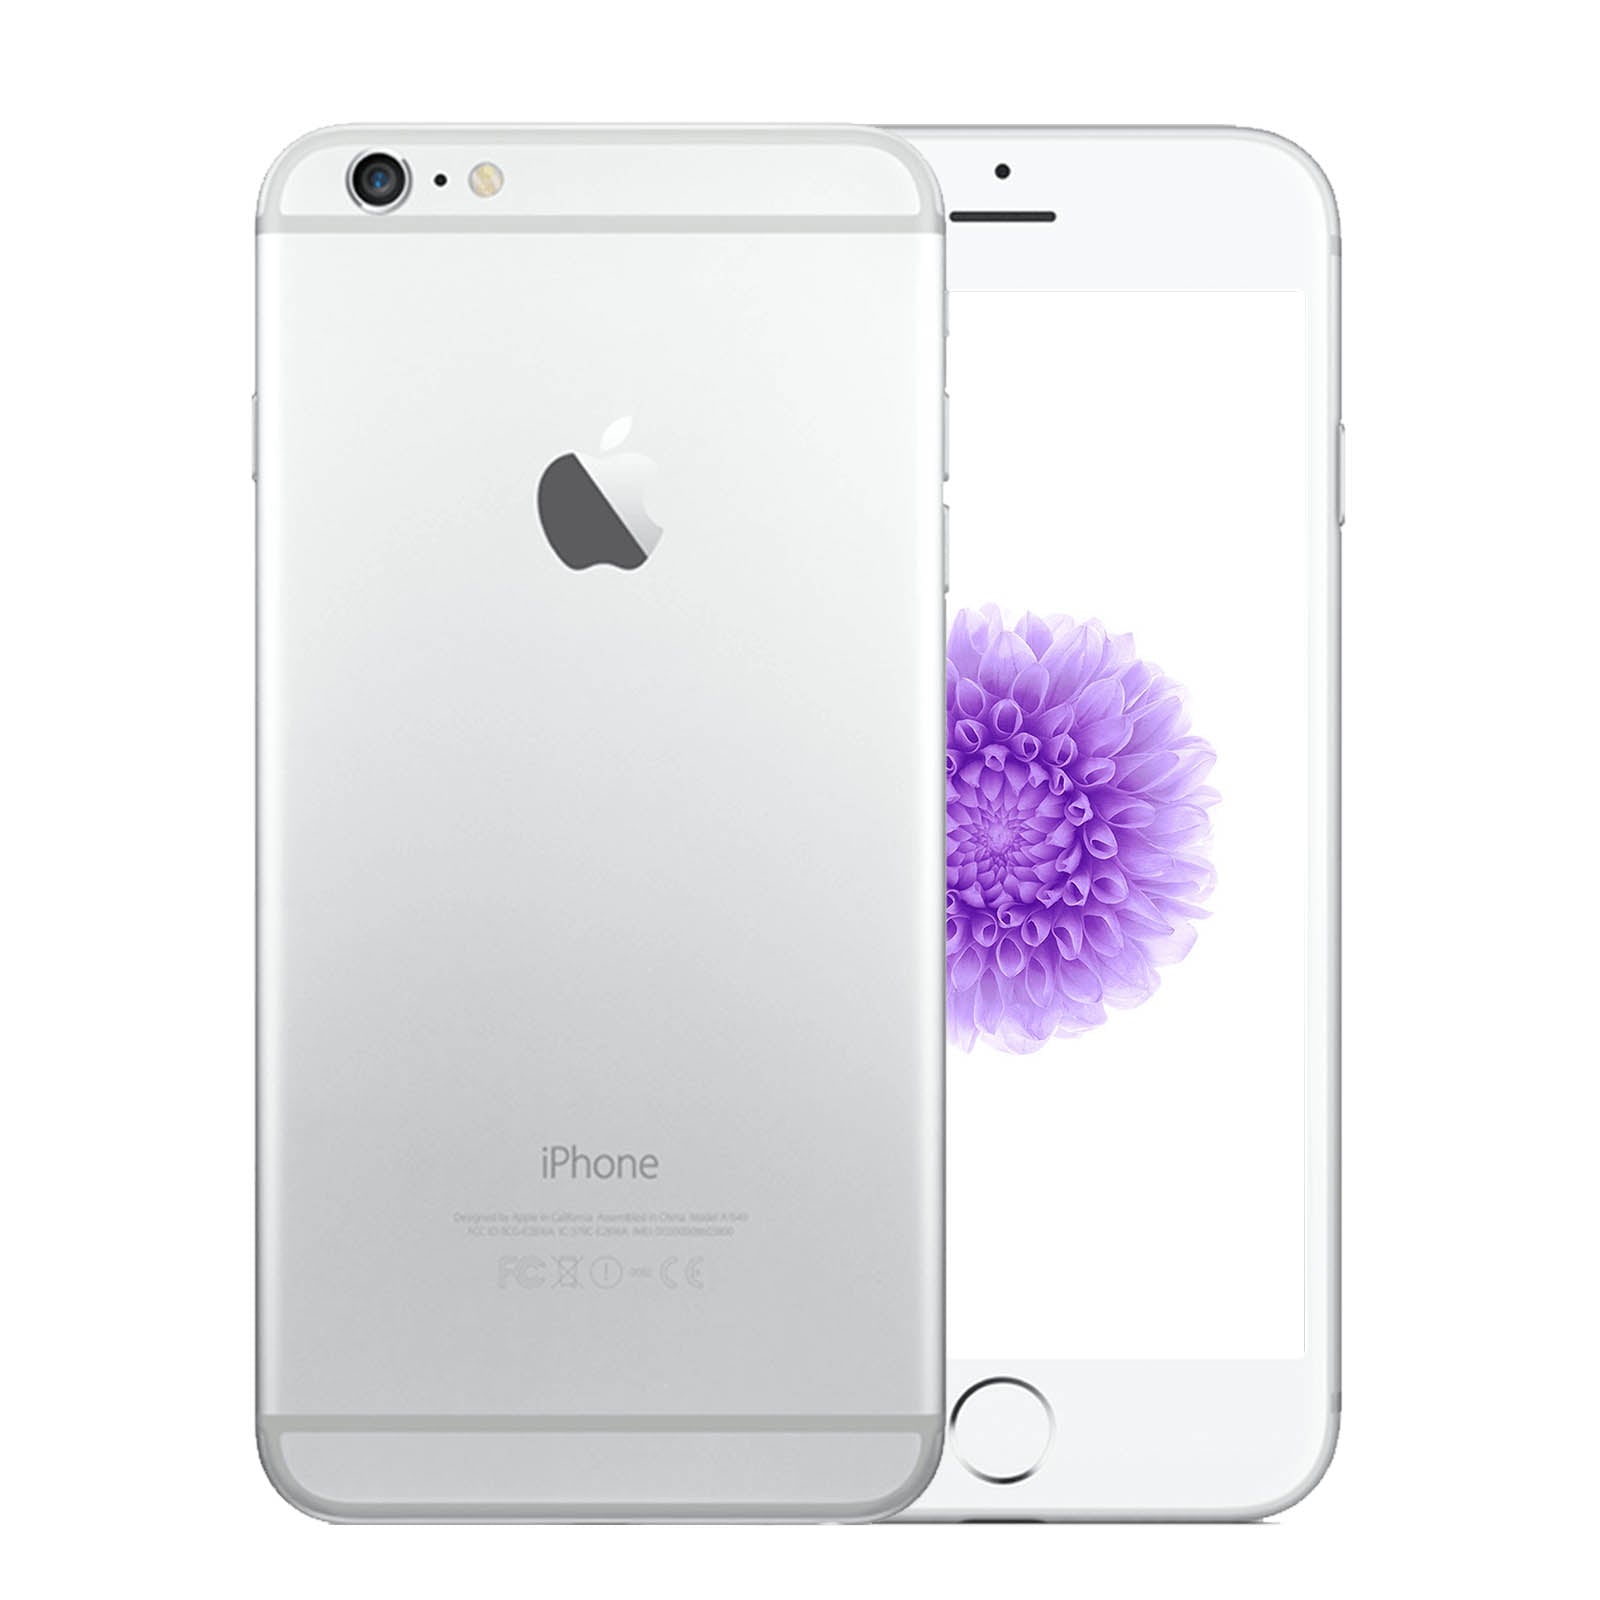 Apple iPhone 6 64GB Silver Pristine - Unlocked